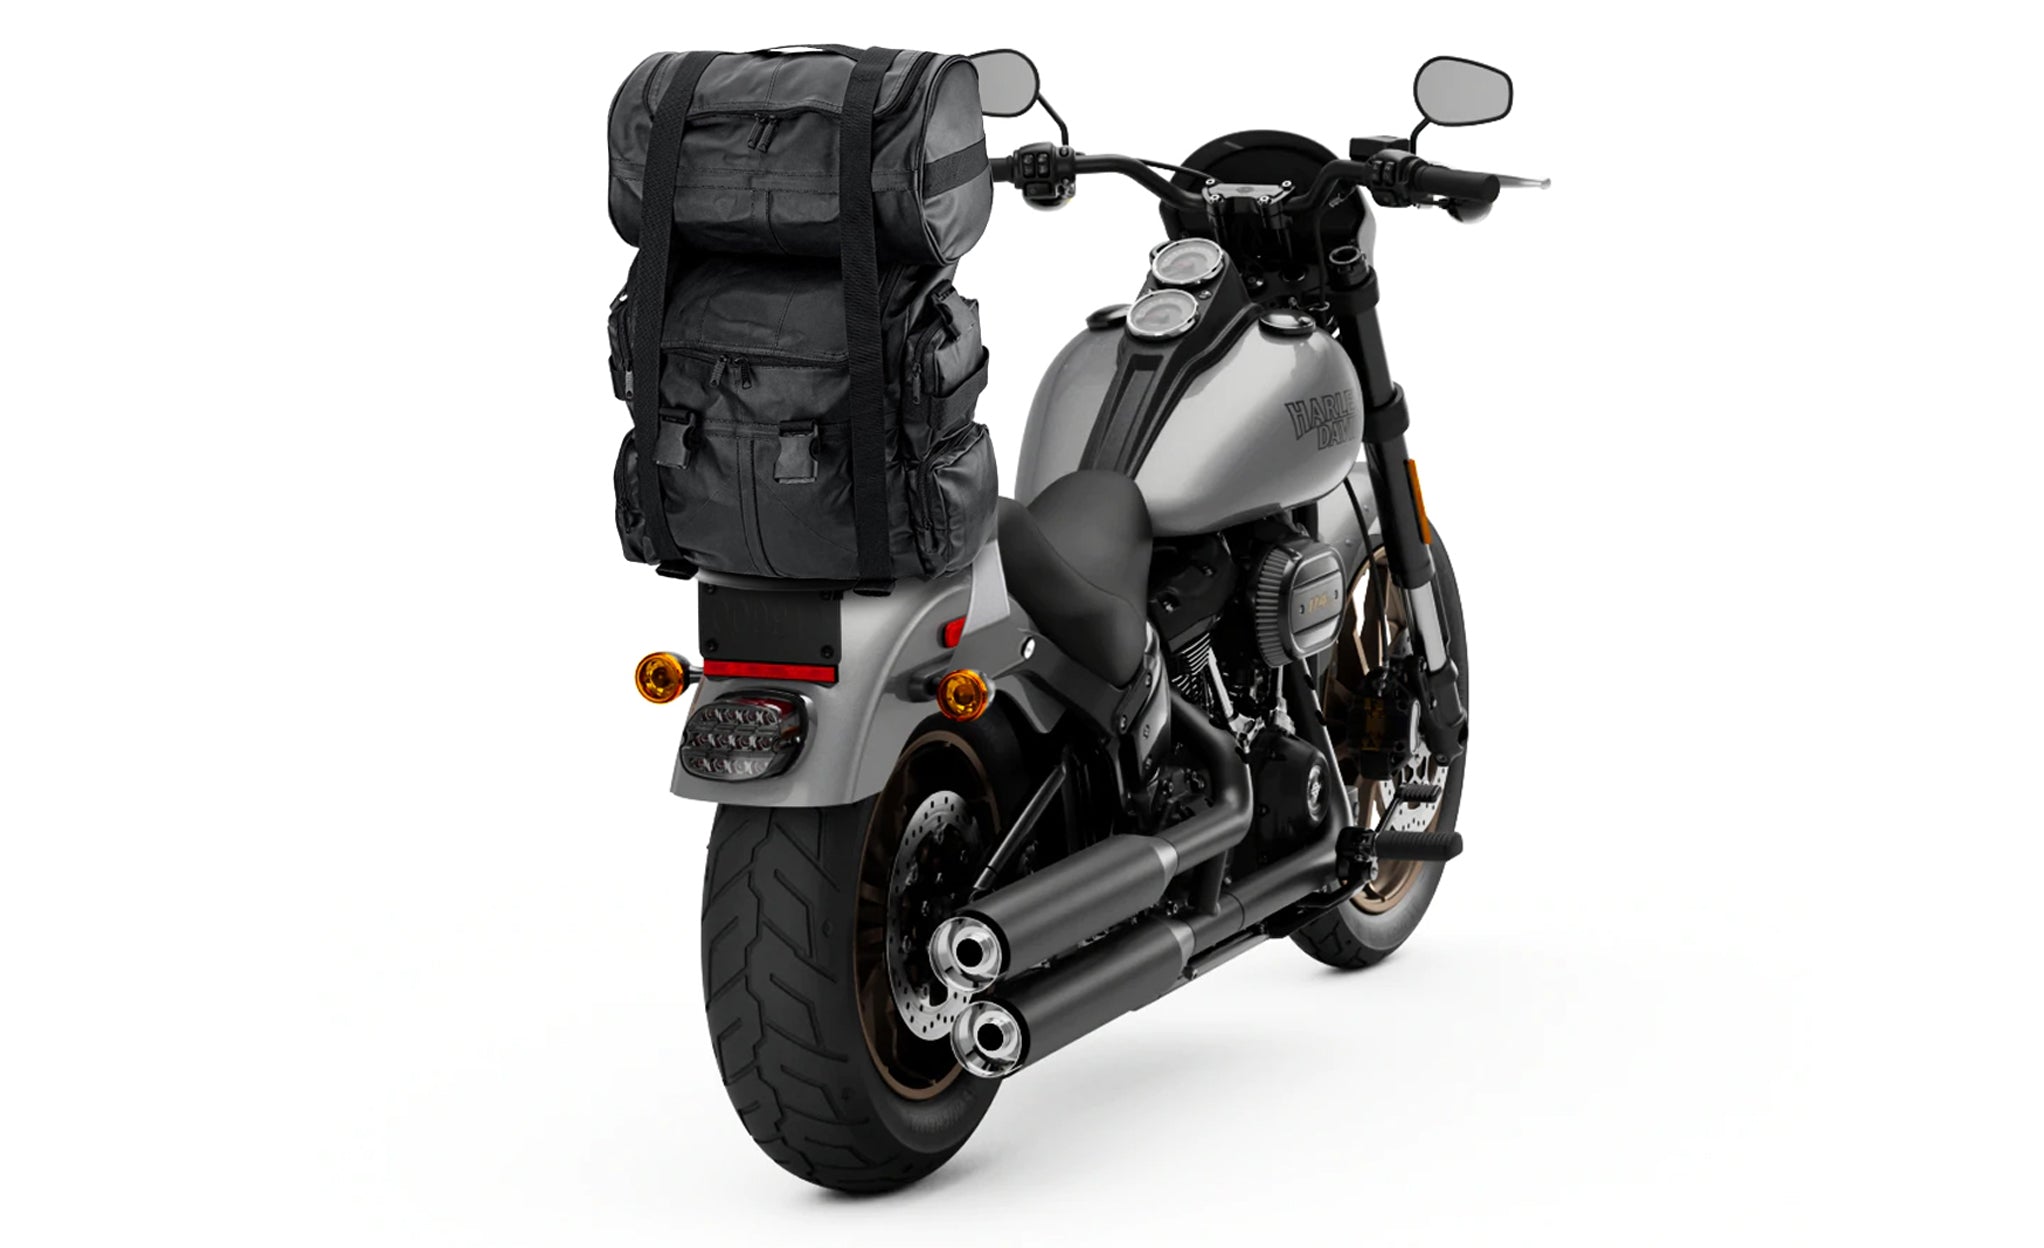 Viking Aero Expandable Medium Honda Motorcycle Tail Bag Bag on Bike View @expand